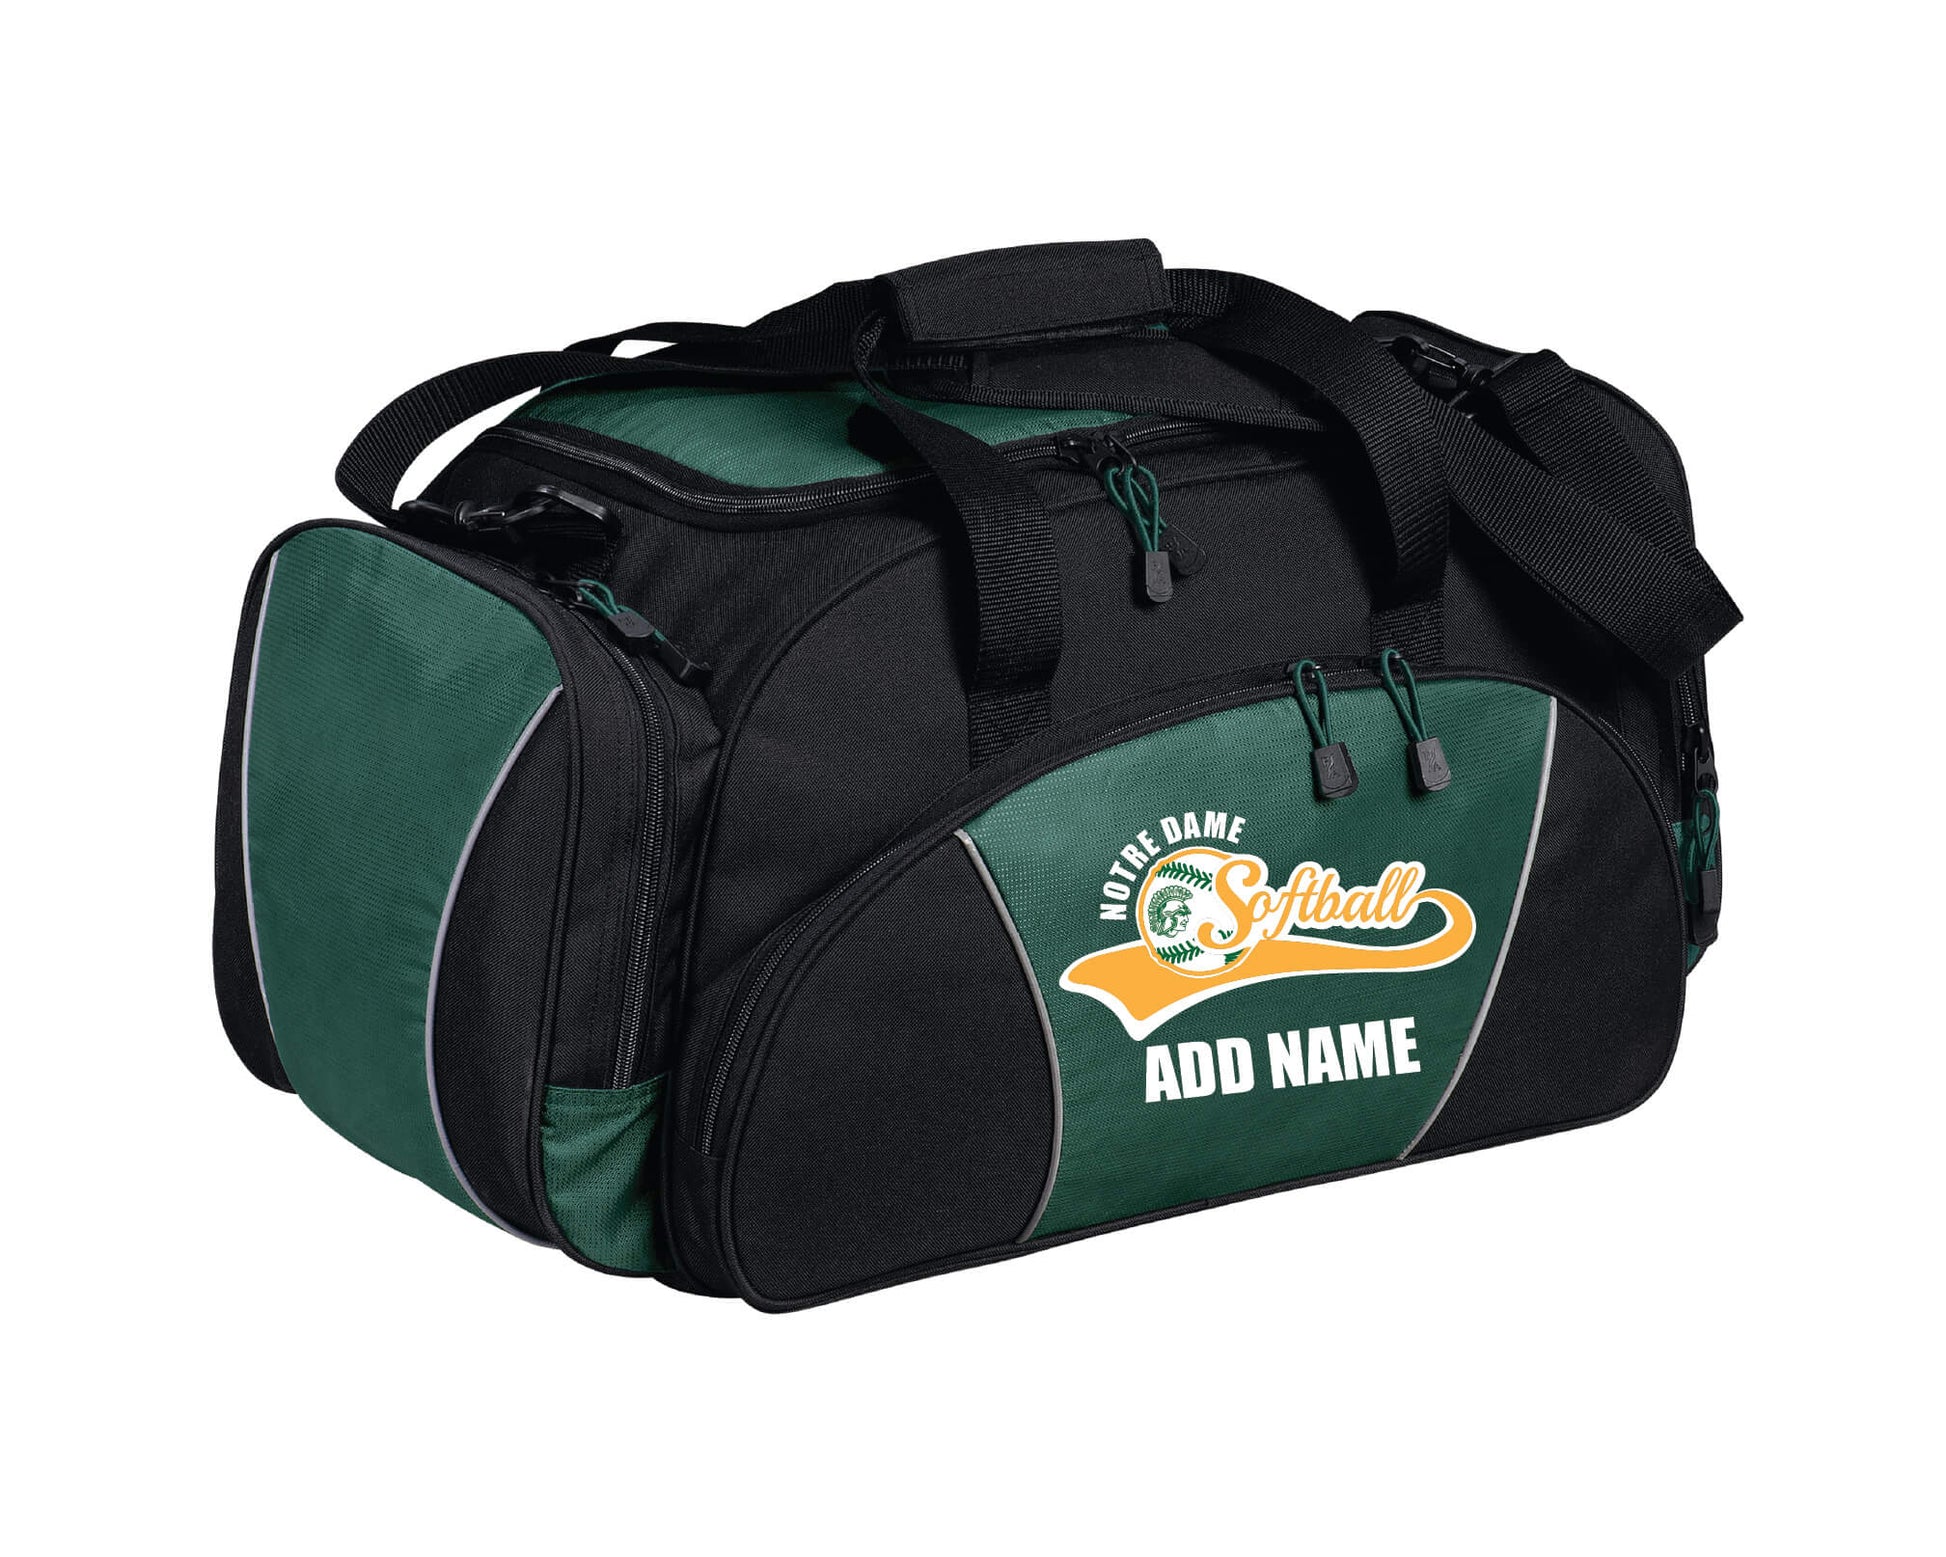 Notre Dame Softball Duffel Bag